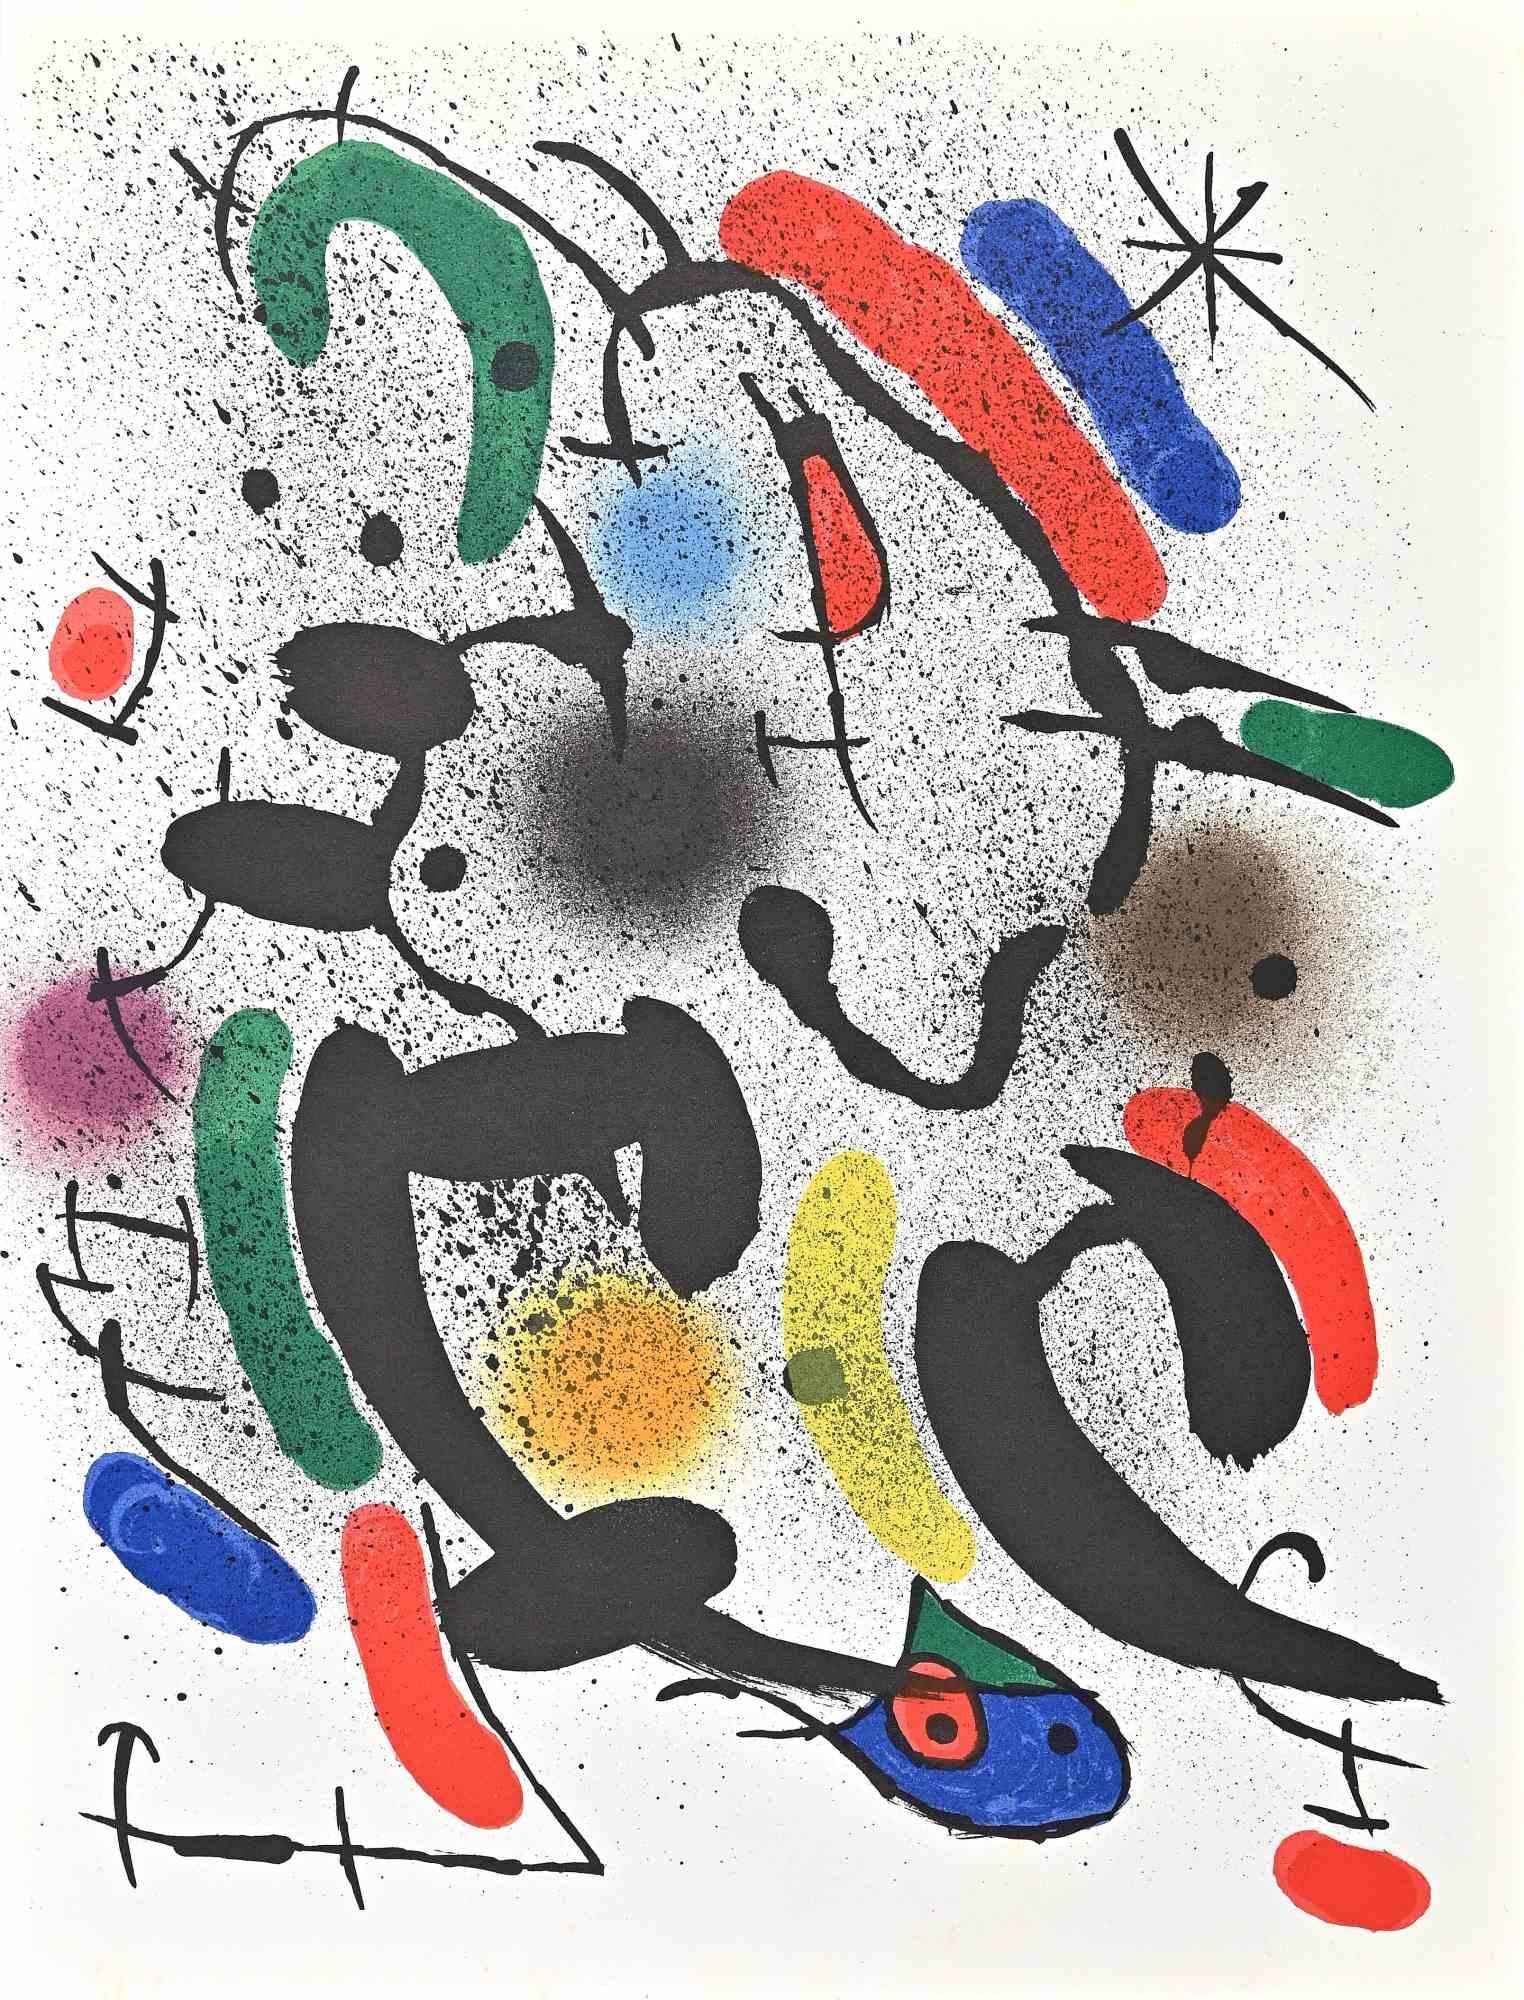 Joan Miró Abstract Print - Miró Lithographe I - Plate VI - Lithograph by J. Mirò - 1972